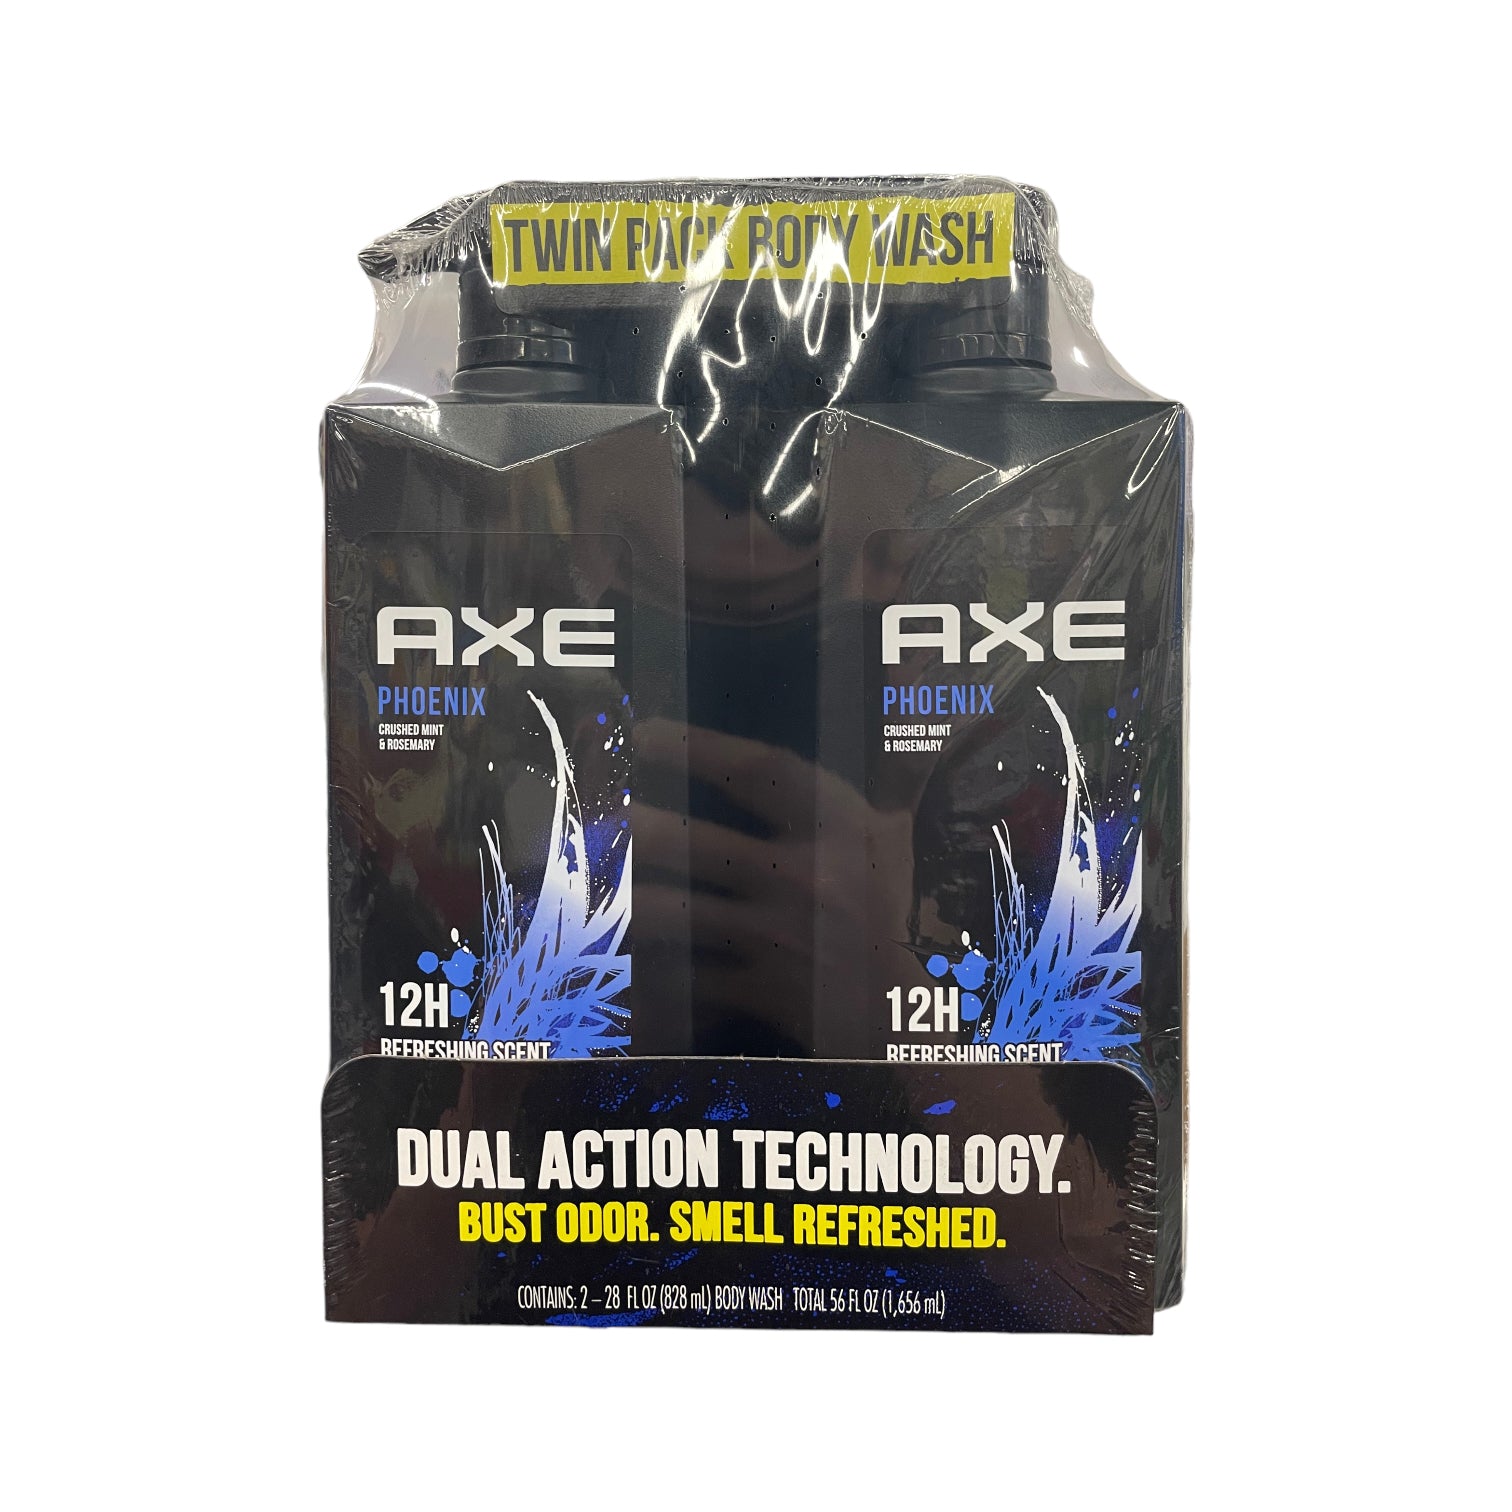 Axe Phoenix Twin Pack Body Wash, 28 oz (2 Count)